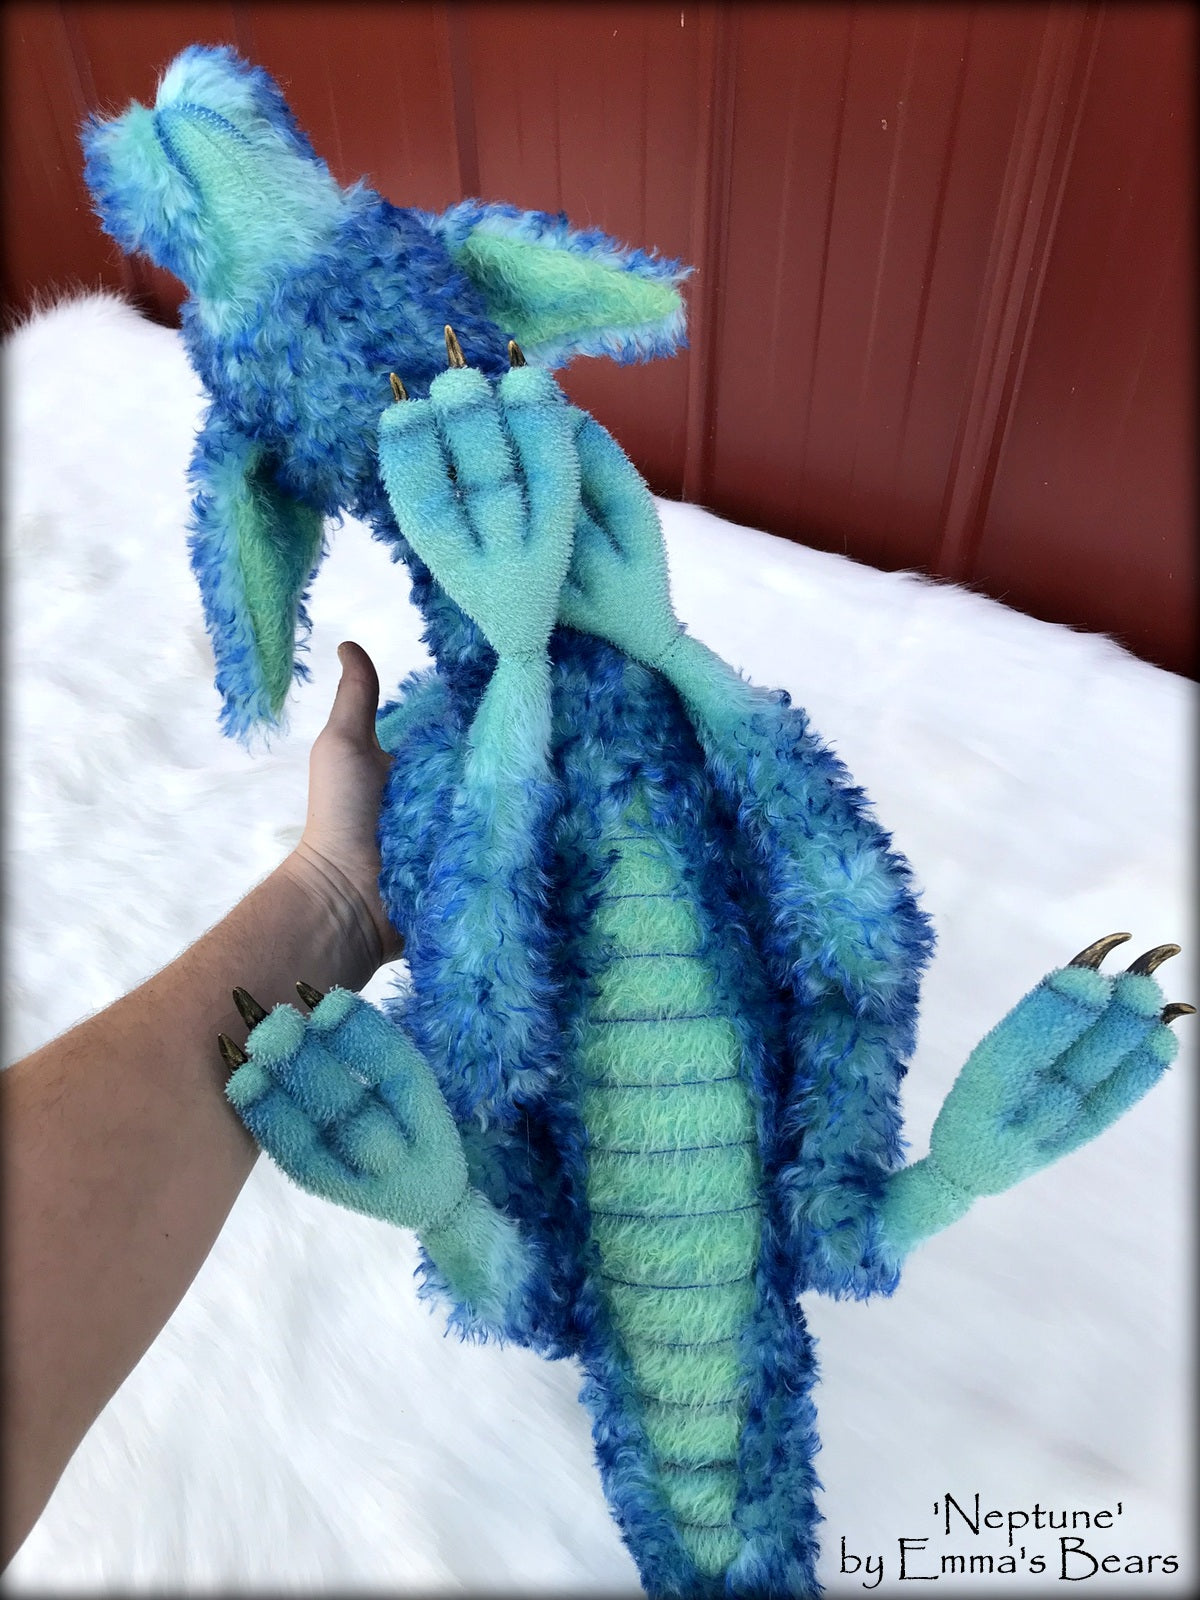 Neptune Dragon - 37" kid mohair dragon soft sculpture - OOAK by Emma's Bears